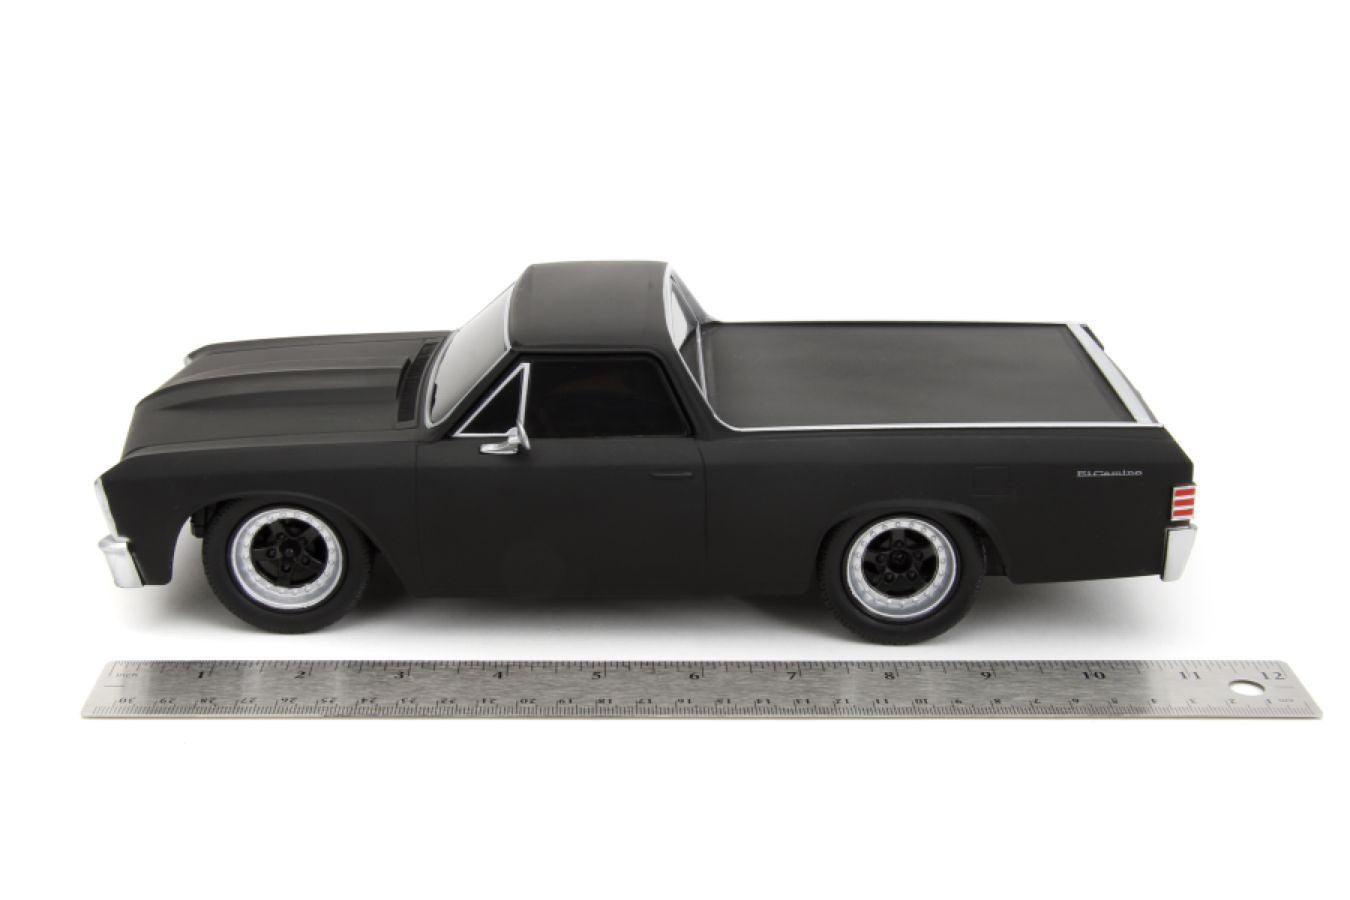 JAD34418 Fast & Furious - 1967 Chev El Camino 1:16 Scale Remote Control Car - Jada Toys - Titan Pop Culture